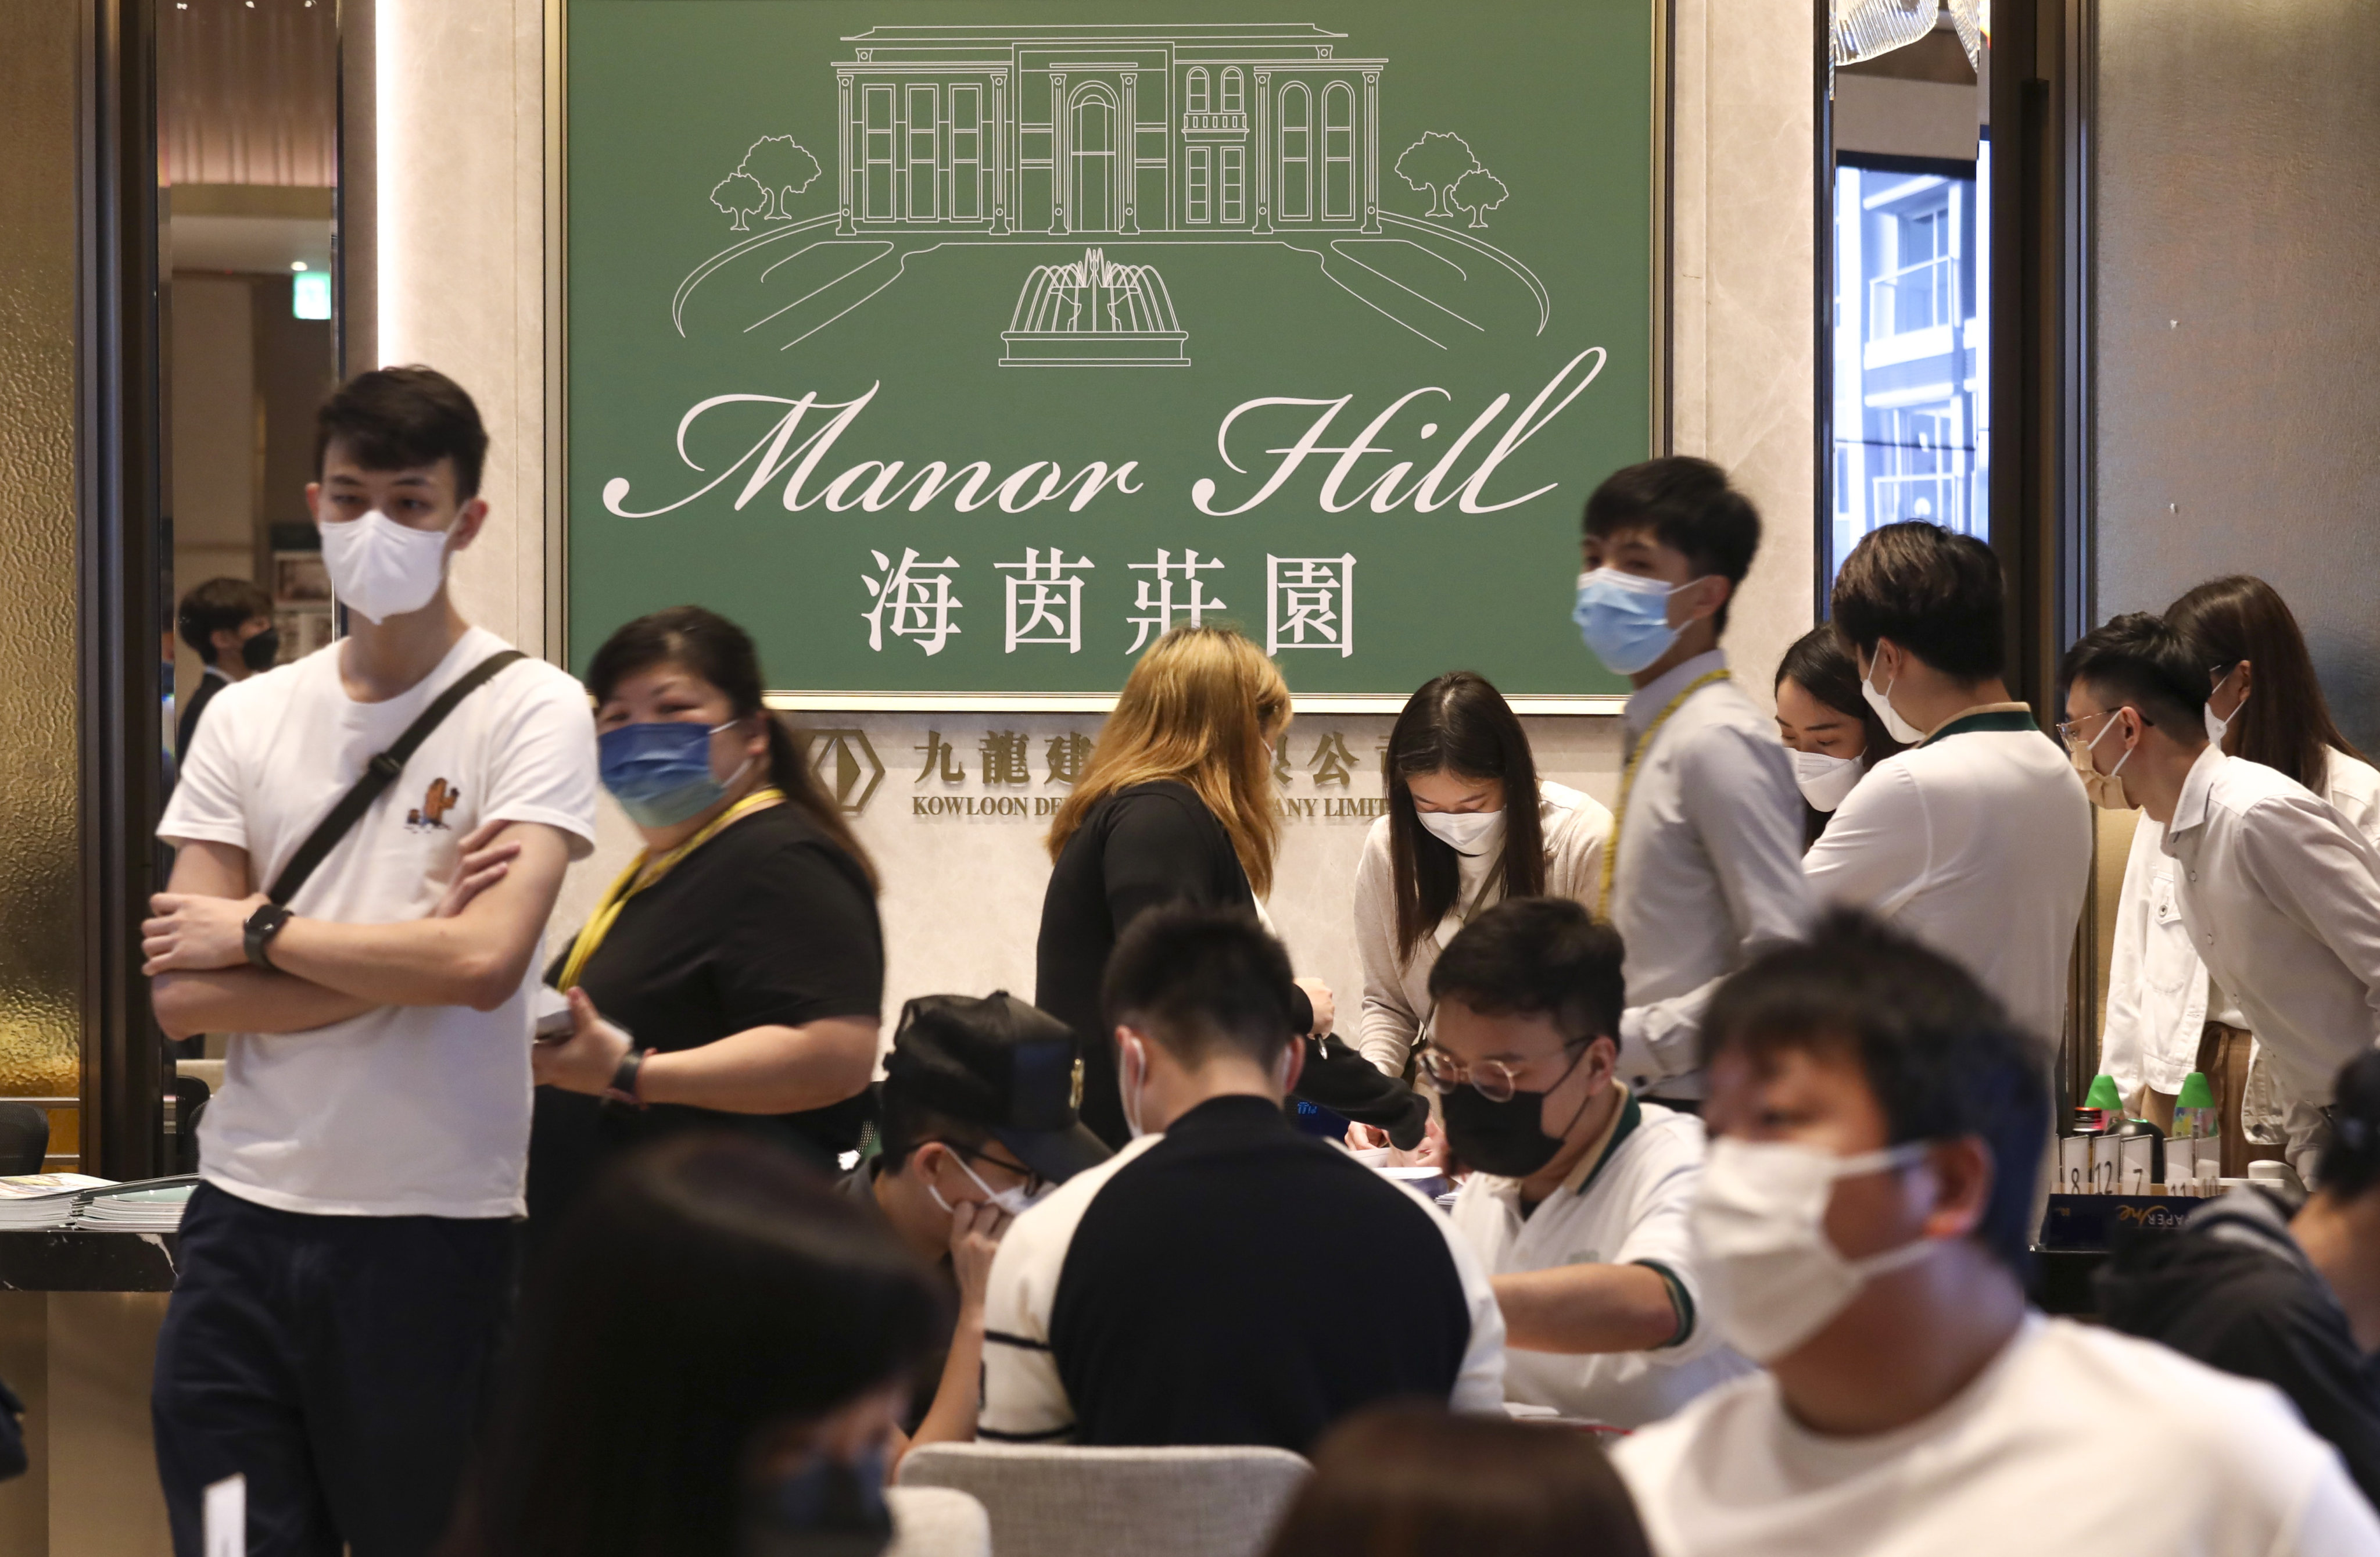 Manor Hill property sales underway at Pioneer Centre in Mong Kok, Hong Kong. Photo: SCMP / Jonathan Wong